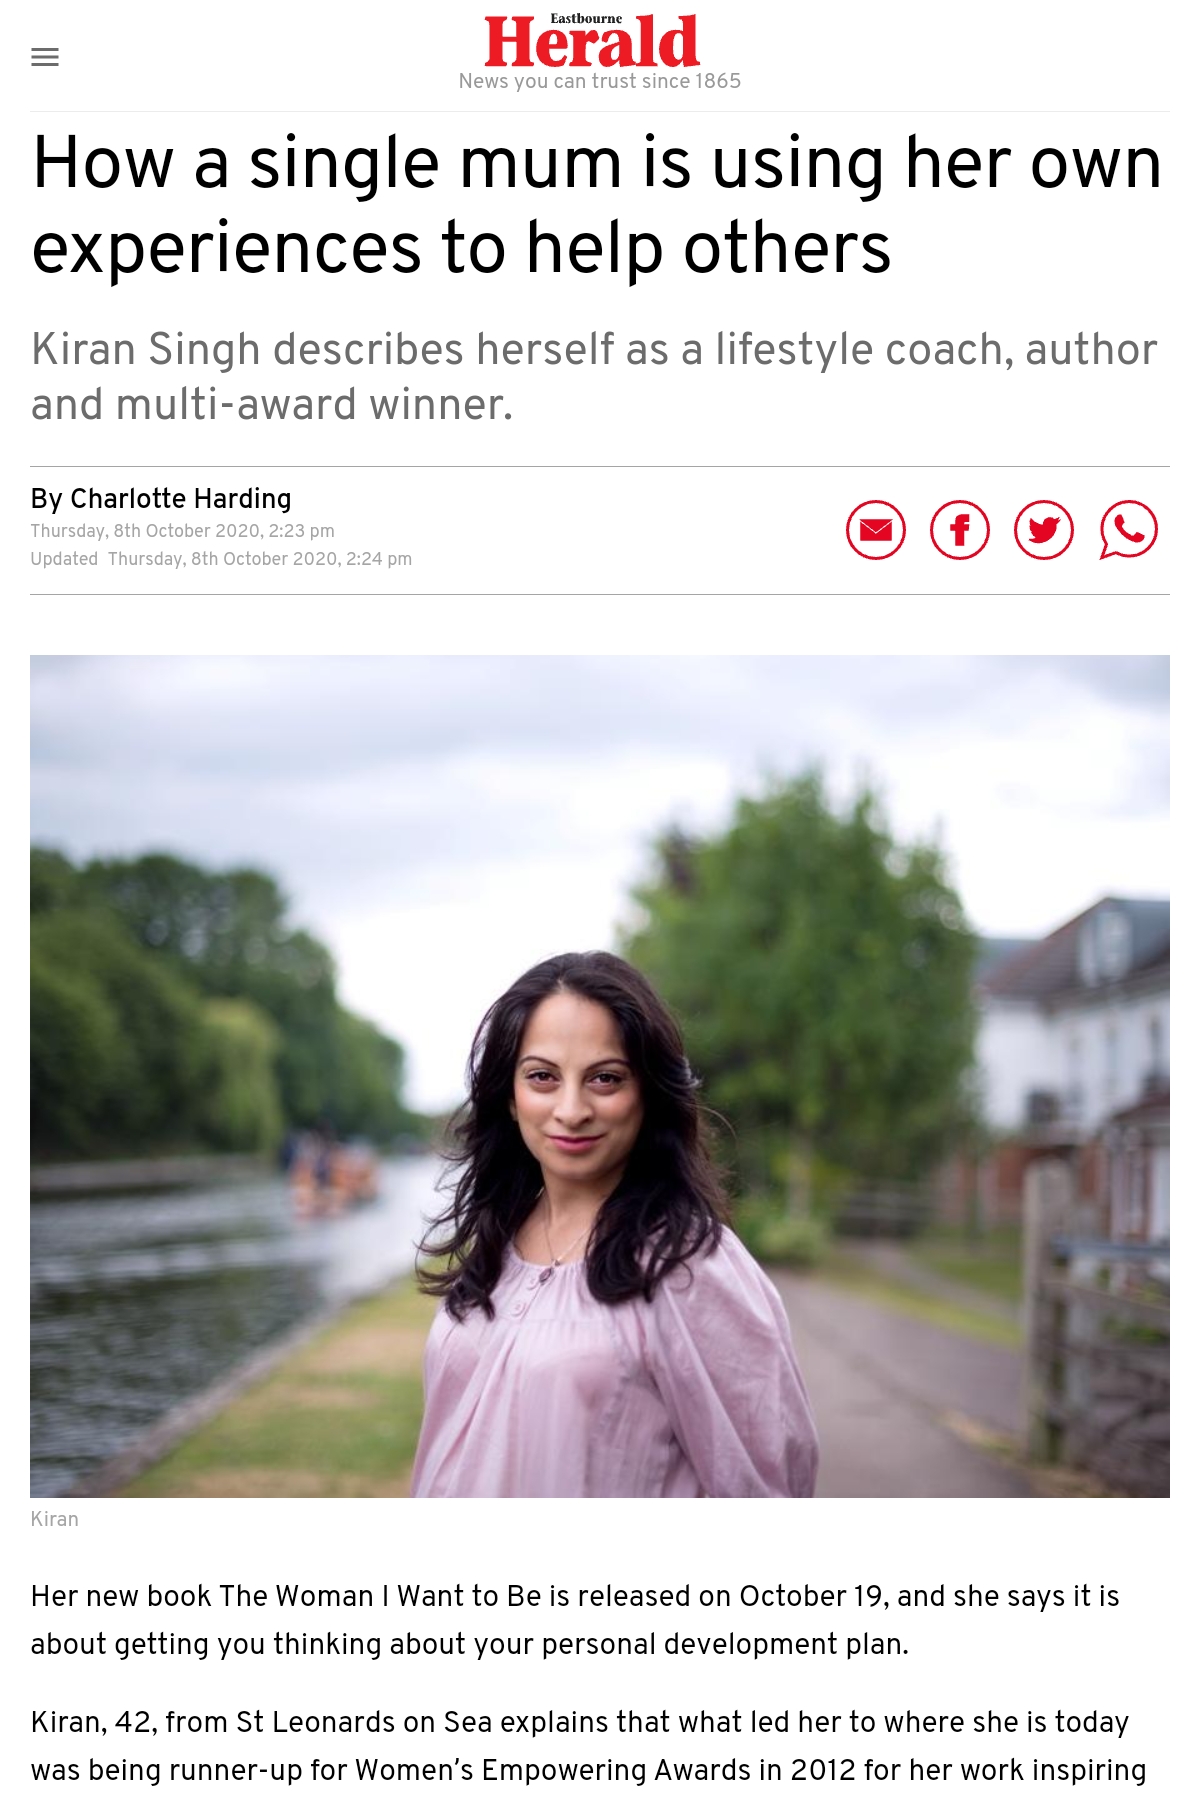 Kiran Singh - Eastbourne Herald